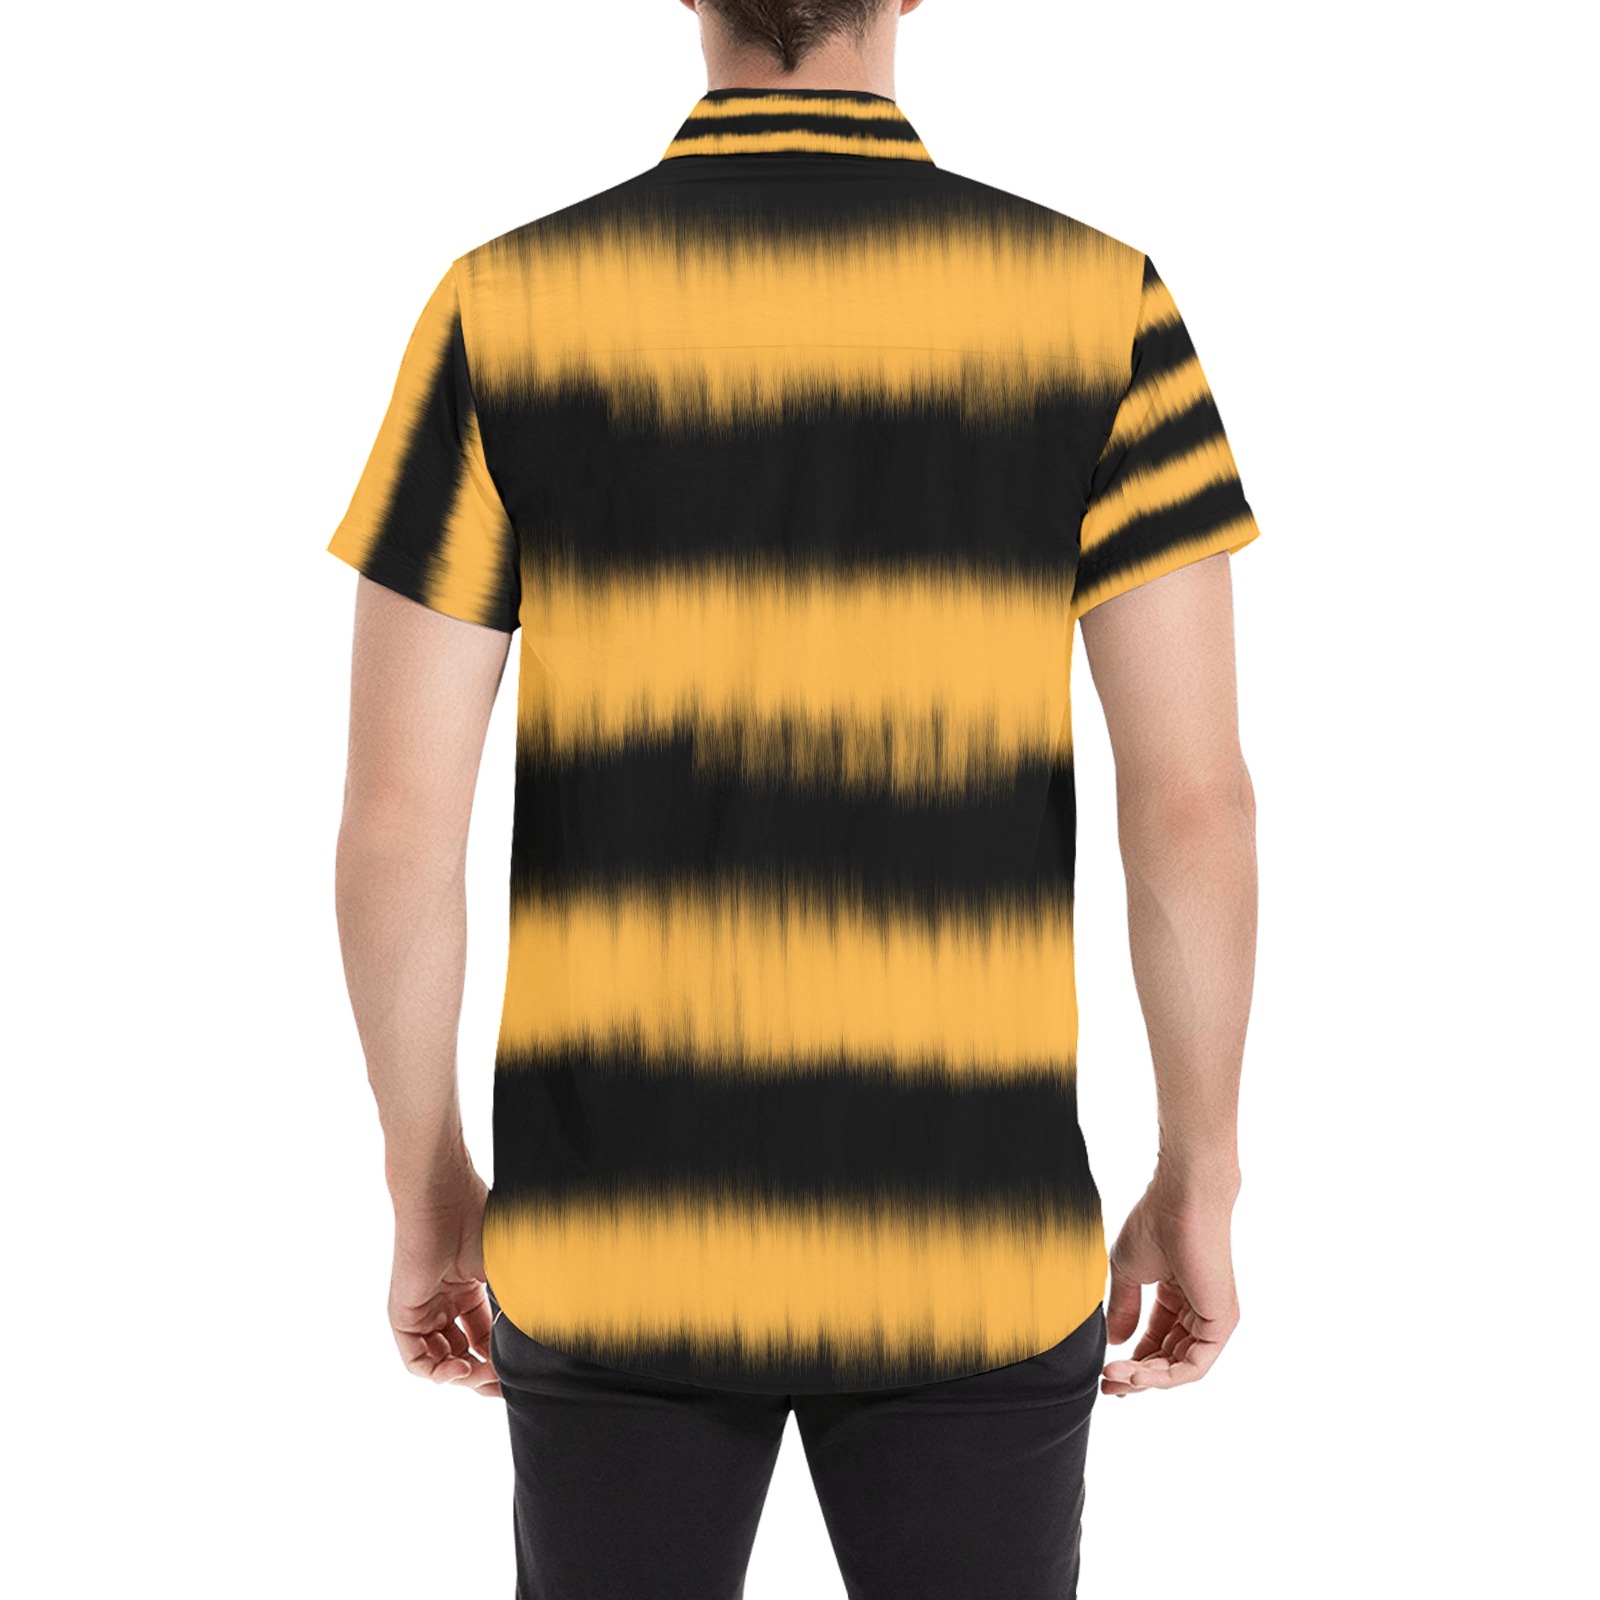 Bee Cool Men's All Over Print Short Sleeve Shirt (Model T53)